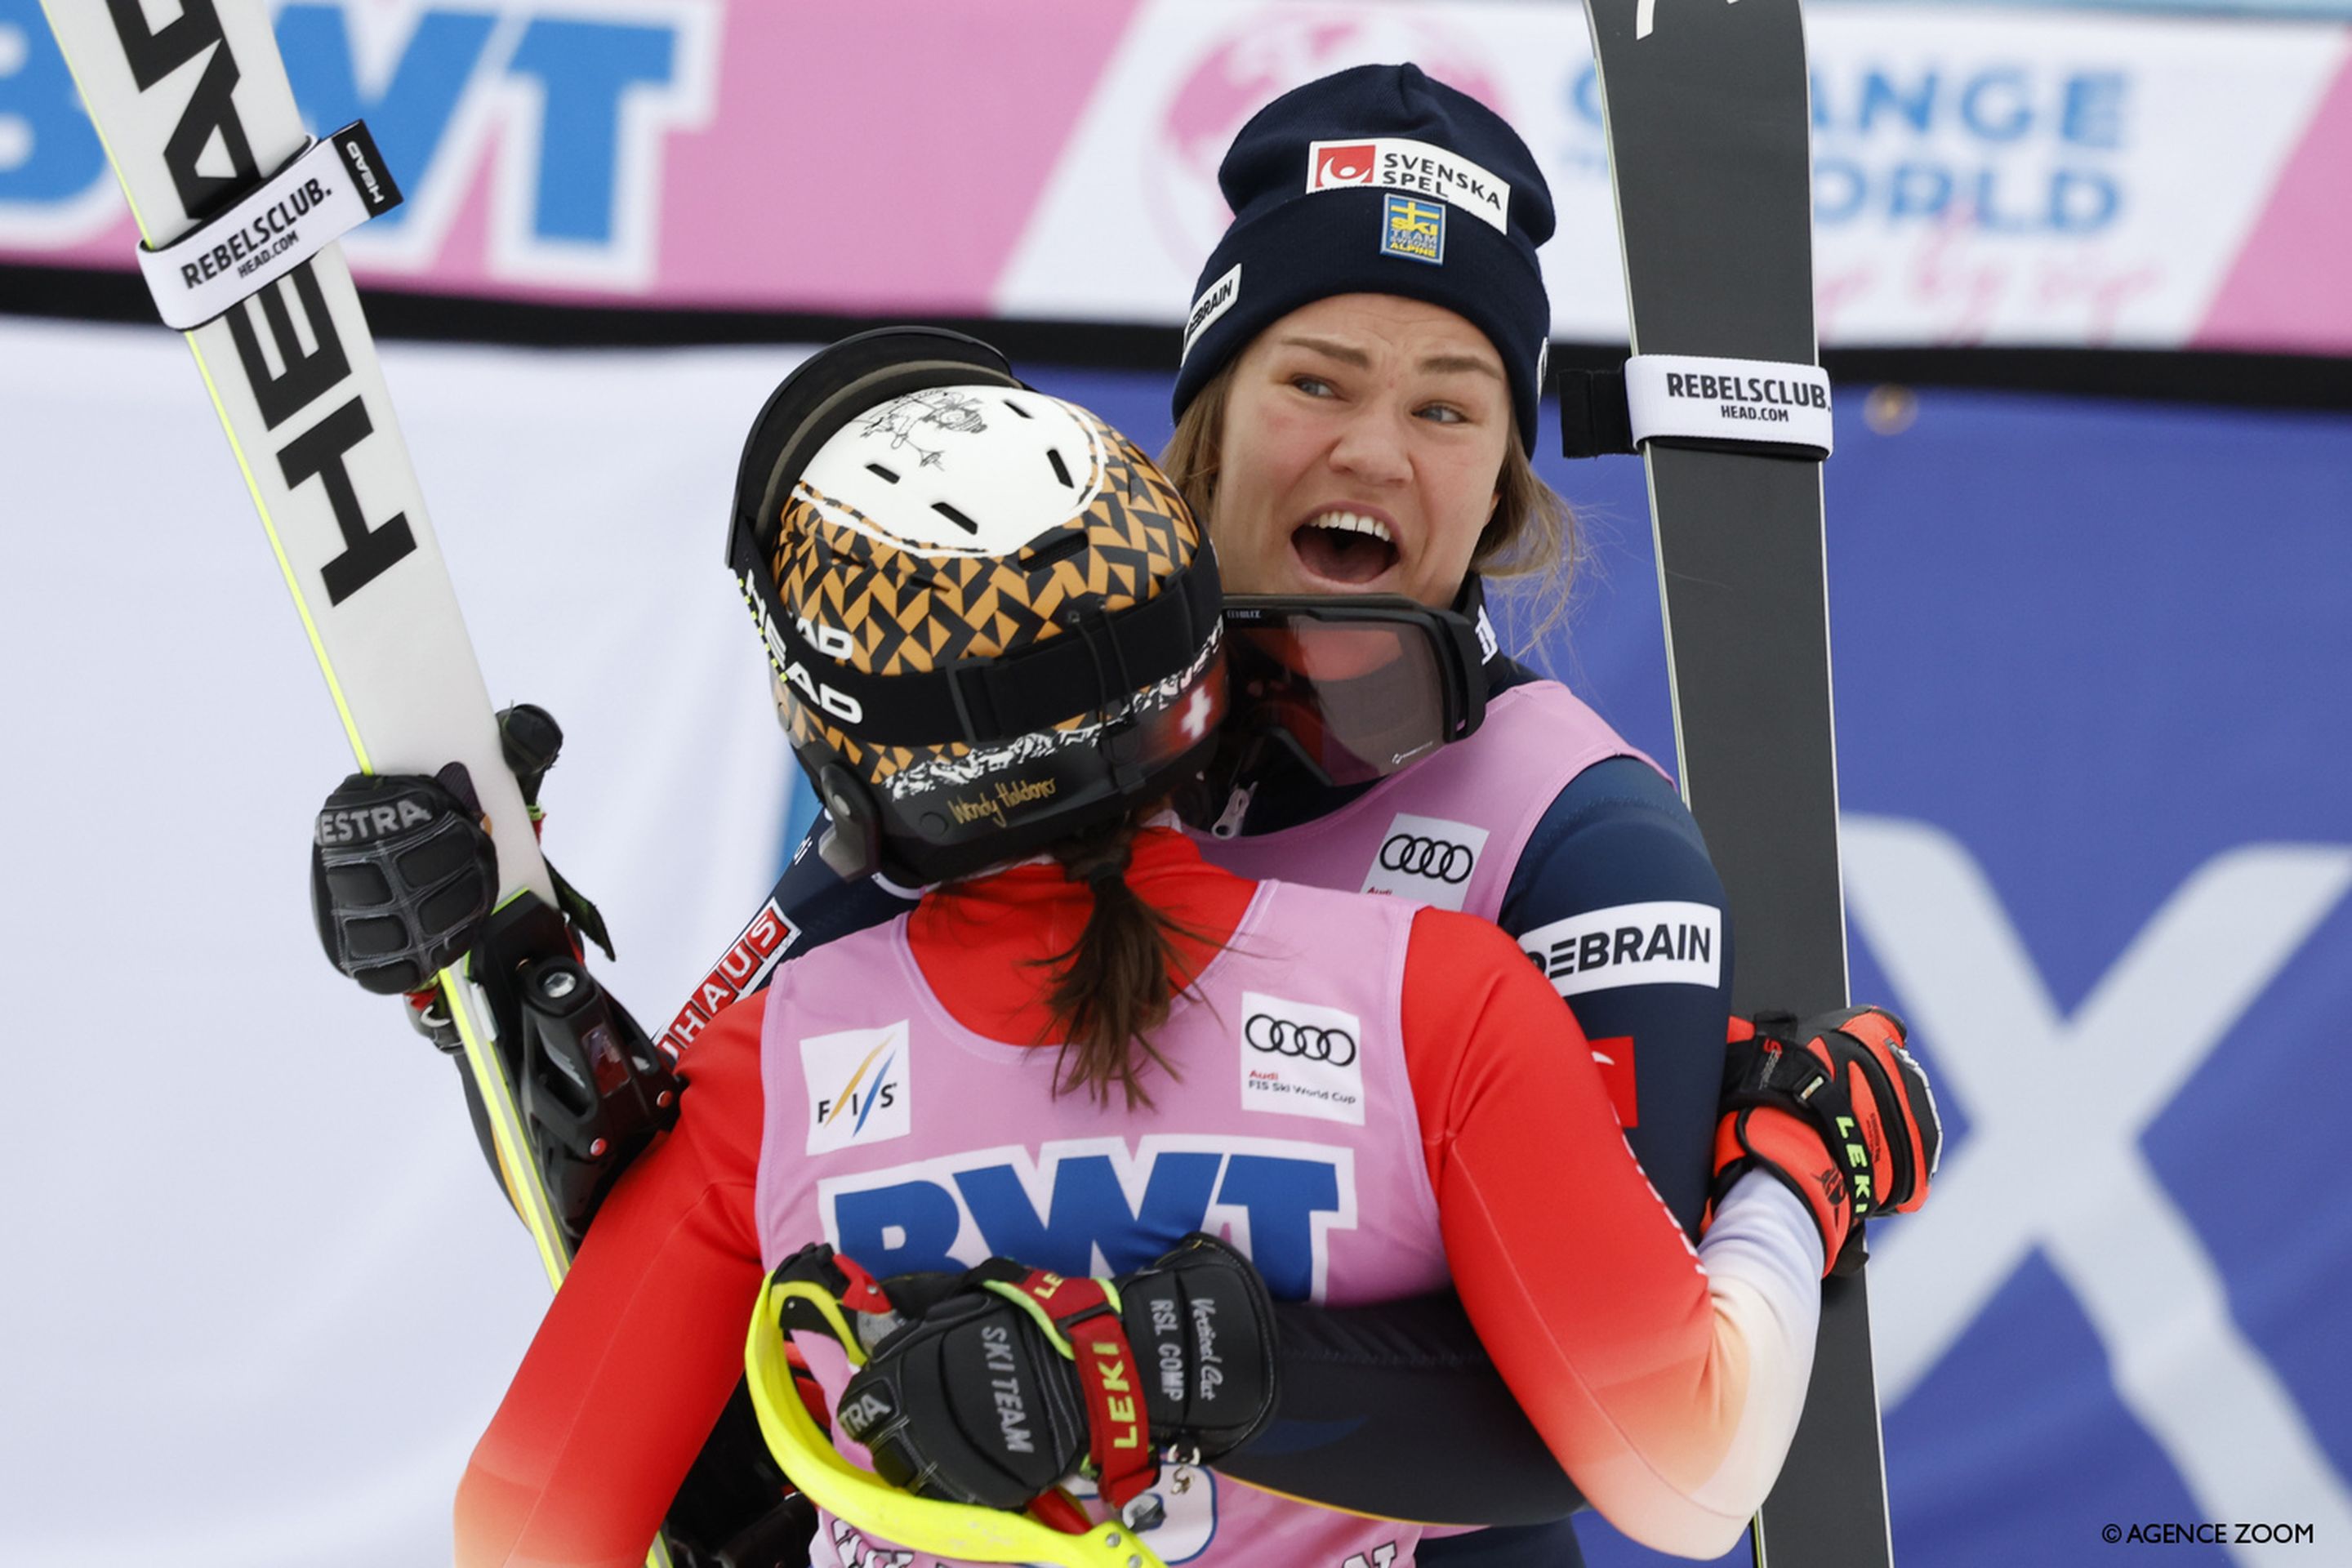 Swenn Larsson congratulates her fellow winner (Agence Zoom)